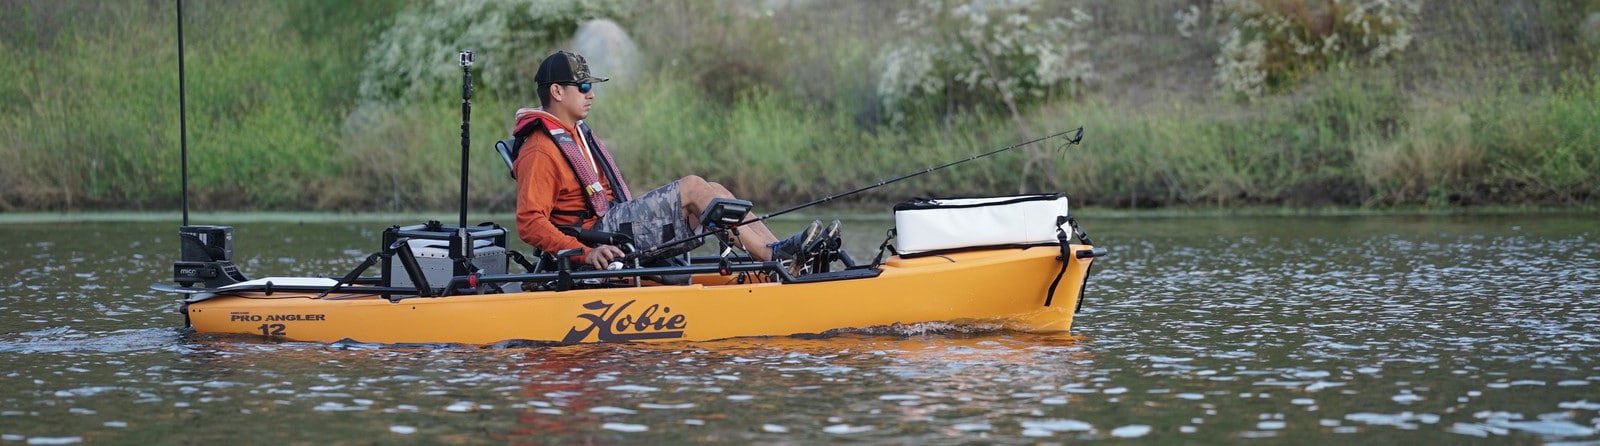 Hobie Pro Angler 12 fishing kayak on the water